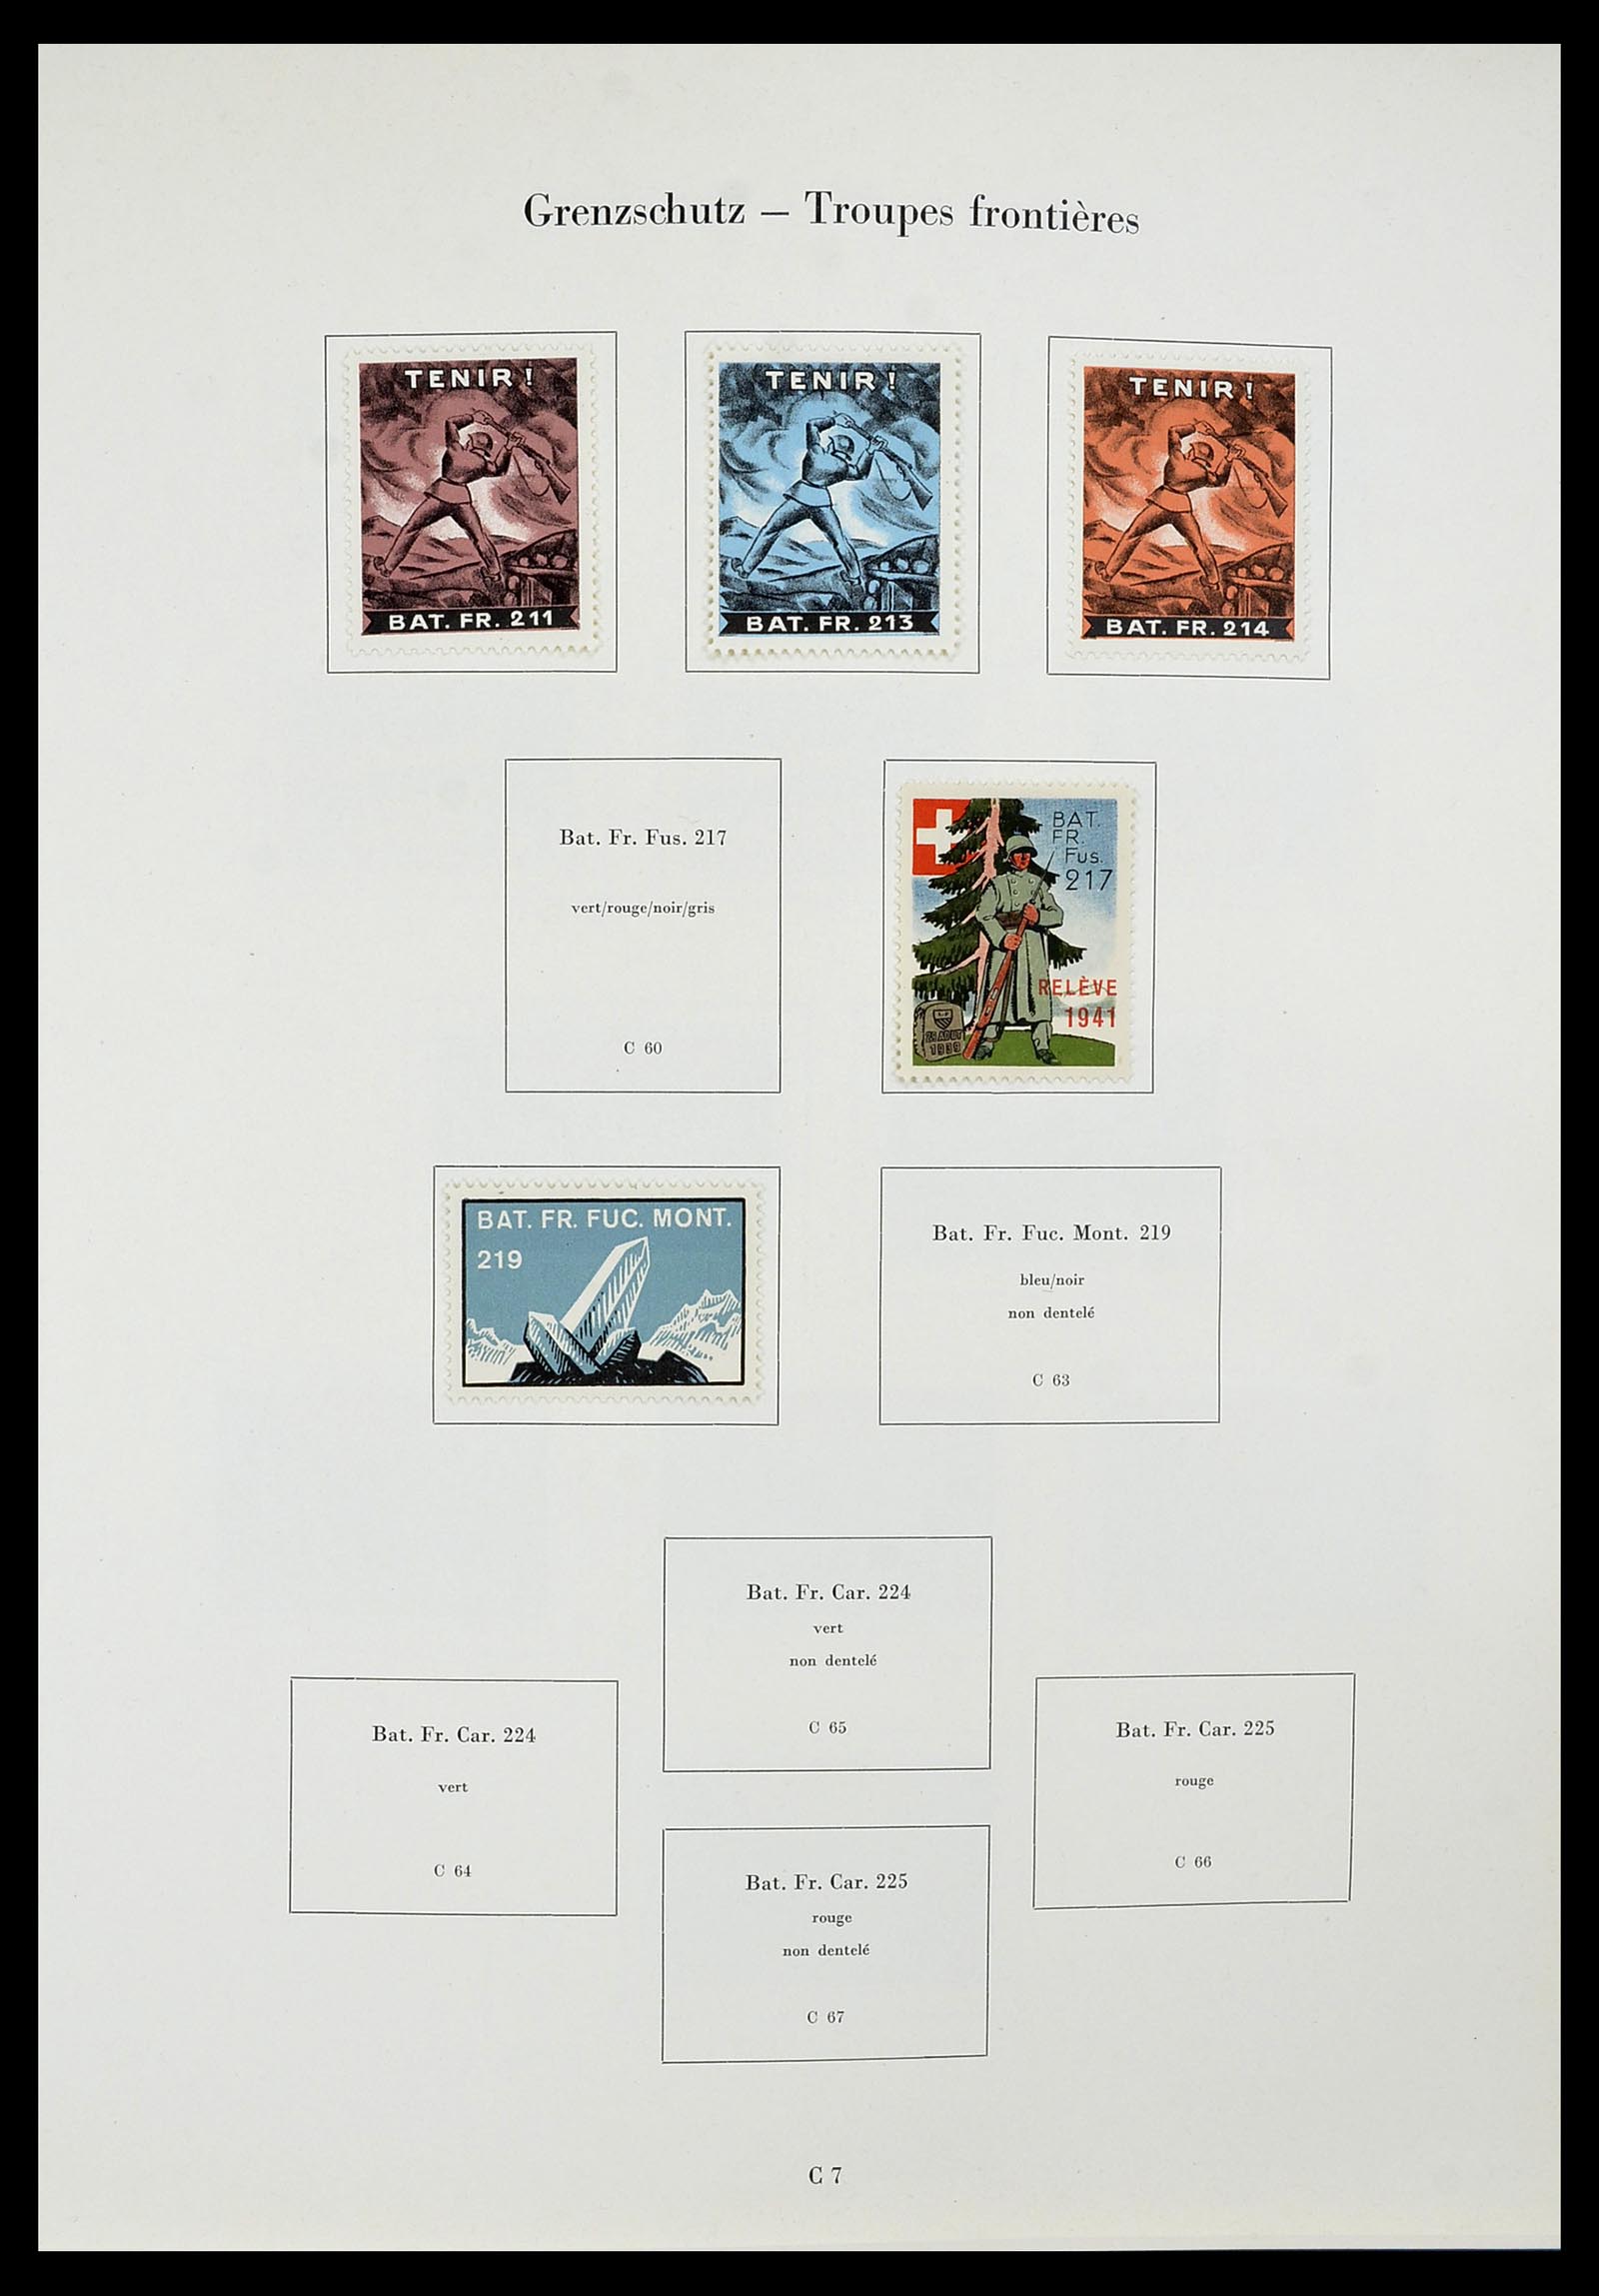 34234 092 - Stamp collection 34234 Switzerland soldier stamps 1939-1945.